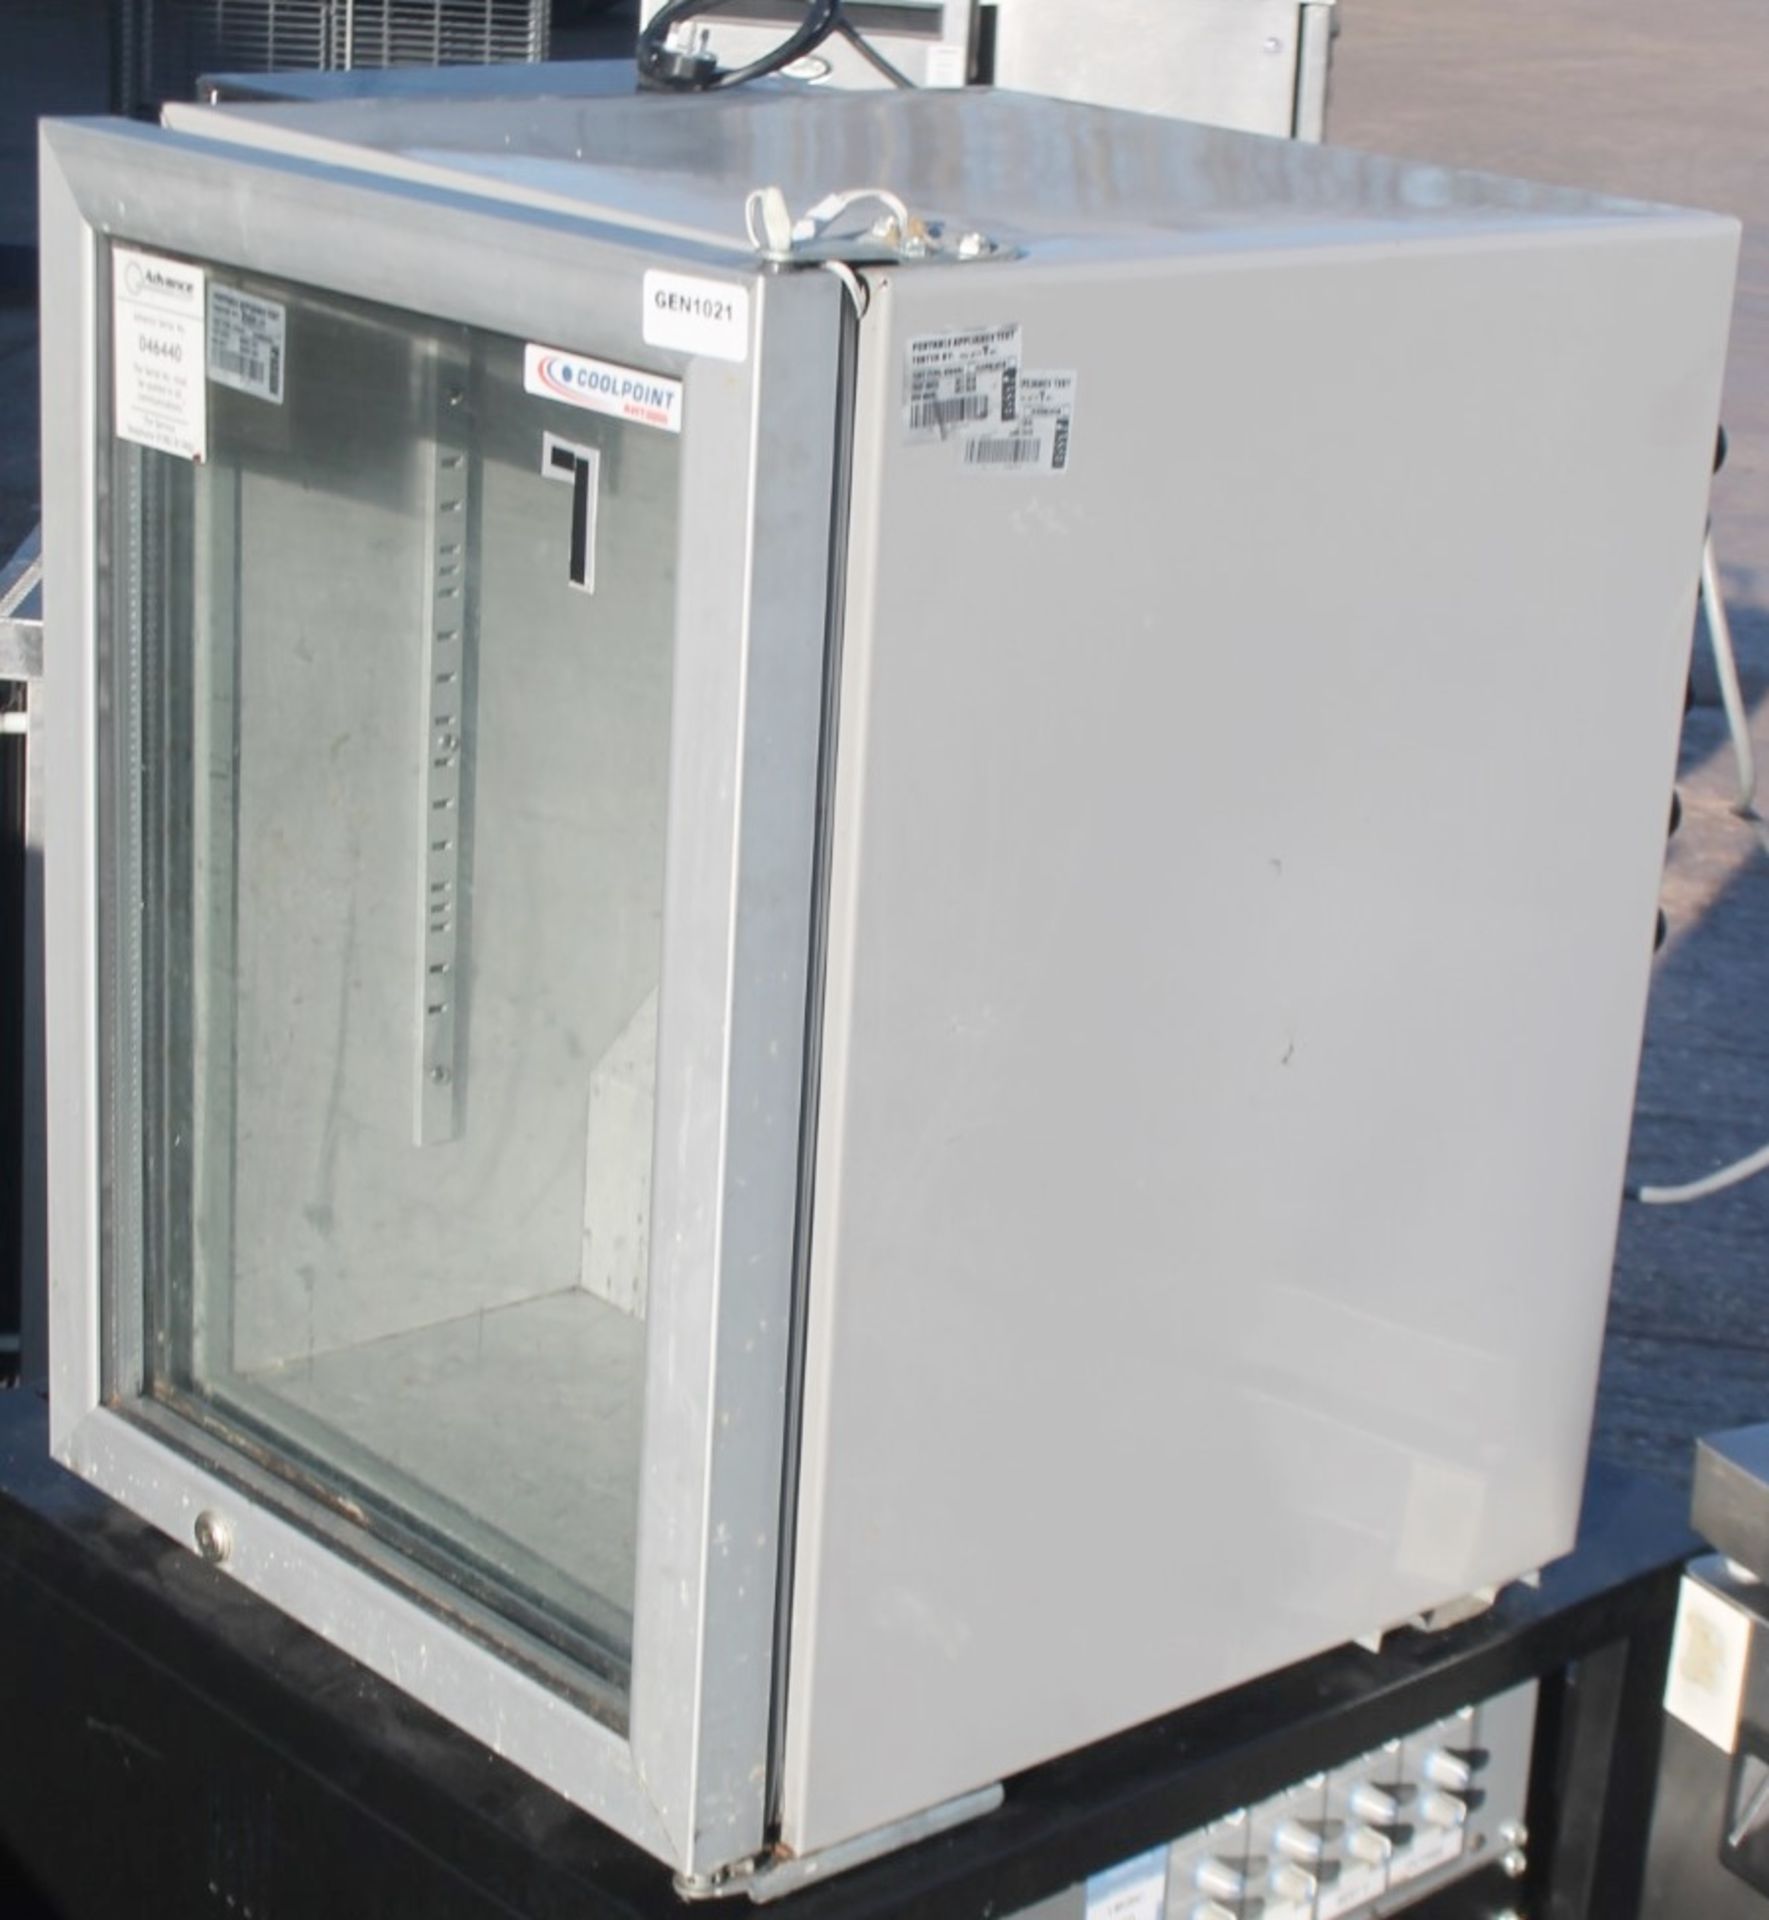 1 x Cool Point Commercial Countertop Cooler - 220-240v - Dimensions: H57 x W43 x D54 cm - CL805 -